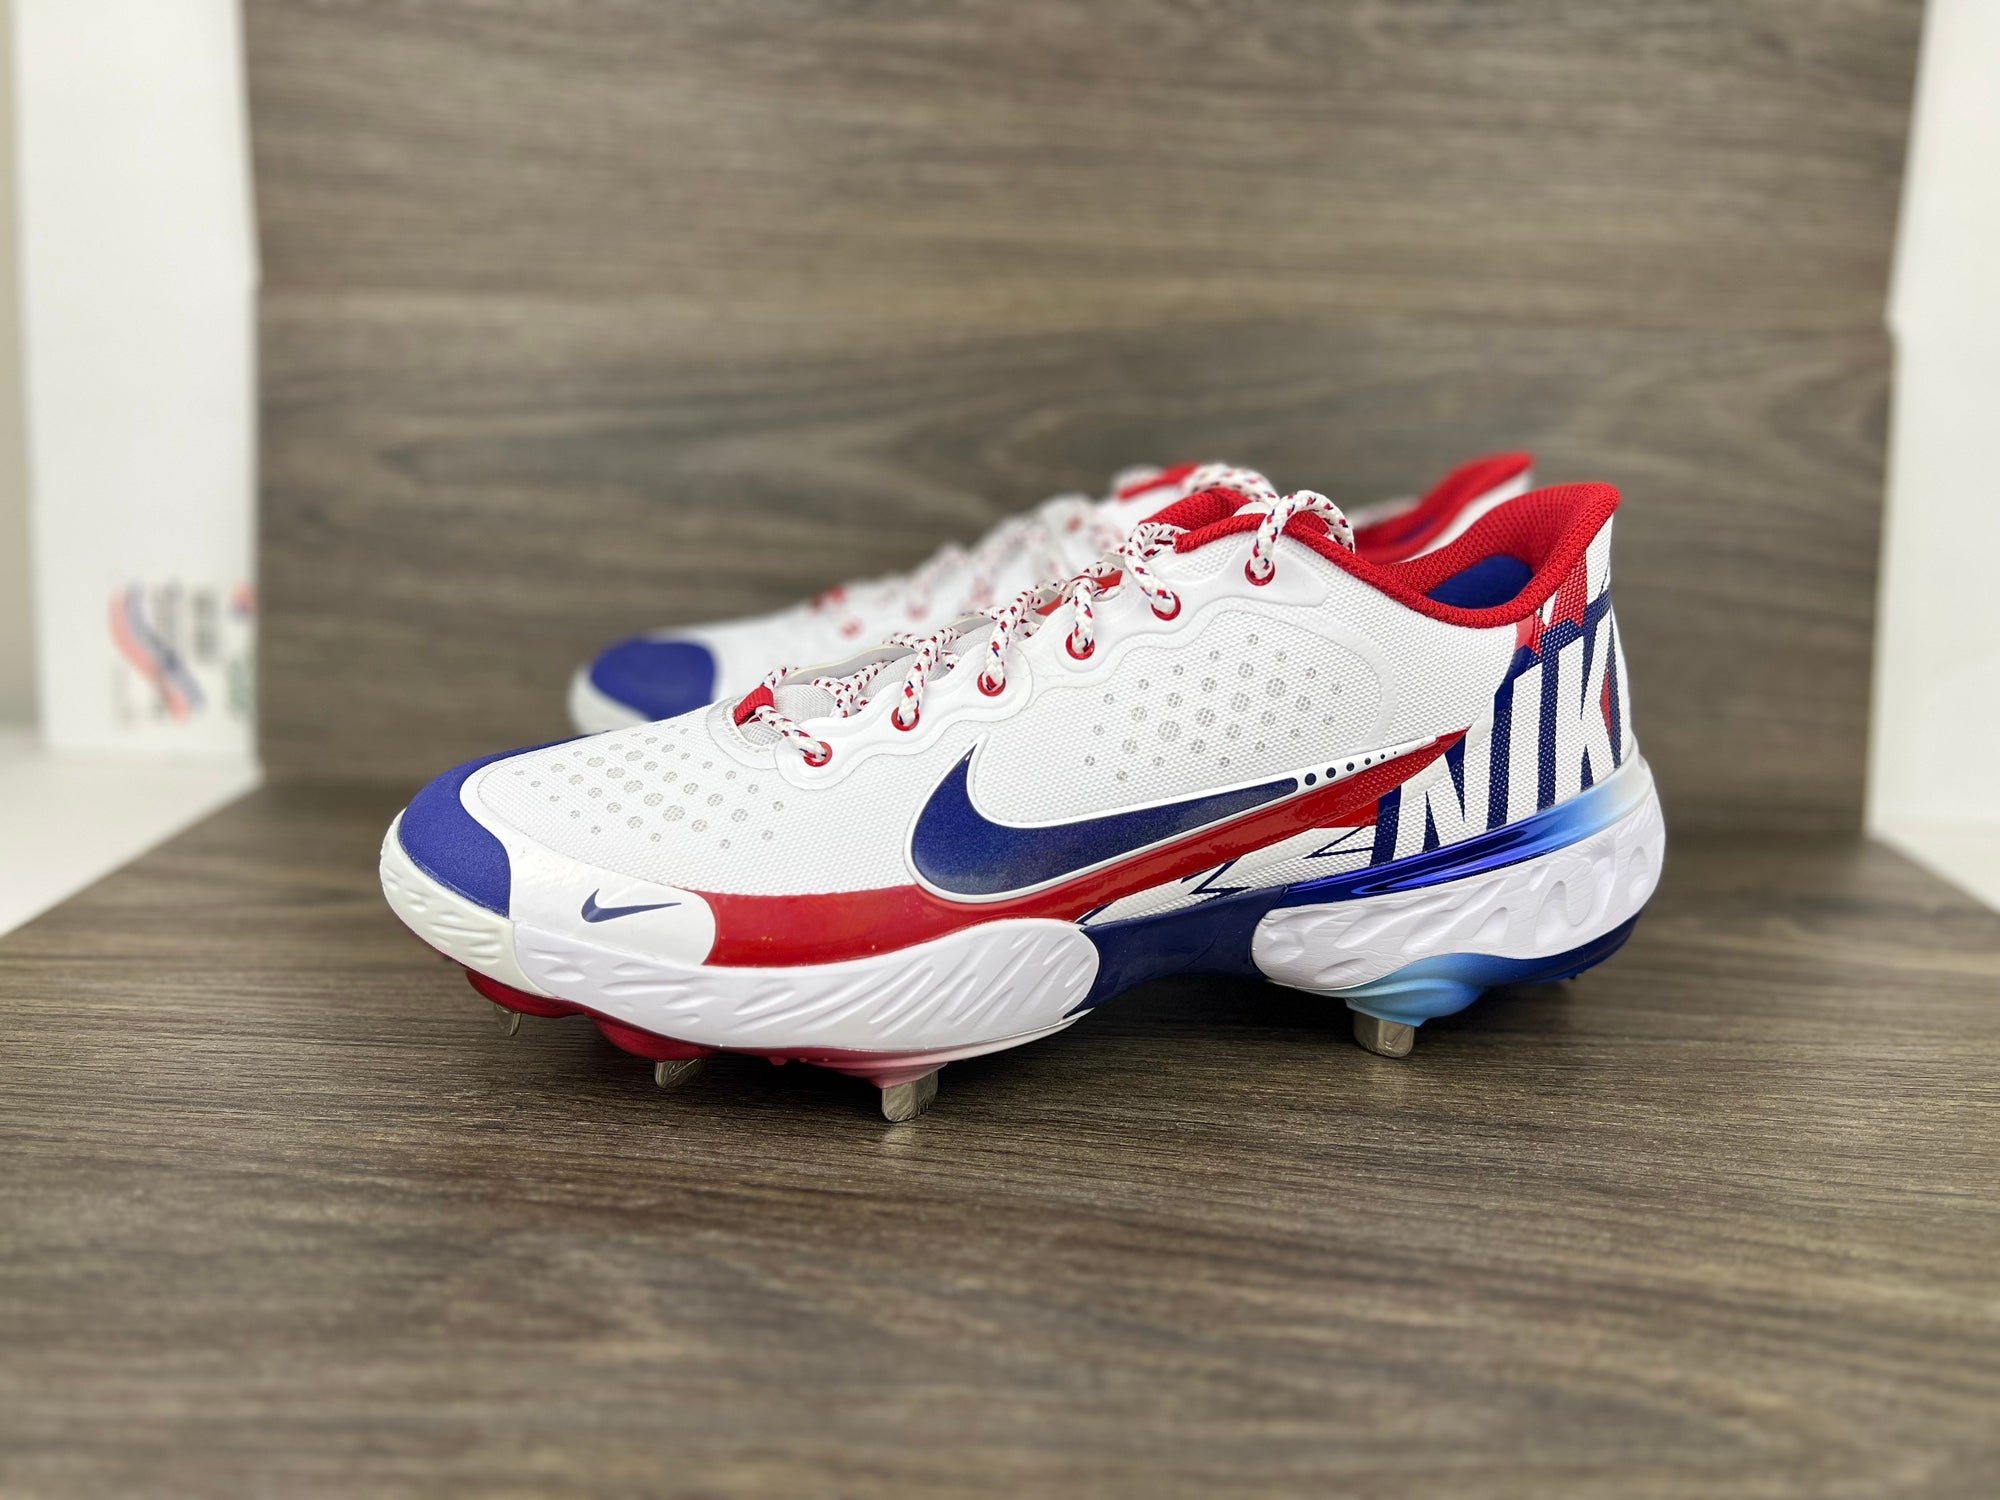 Nike Alpha Huarache Football Cleats : NARP Clothing